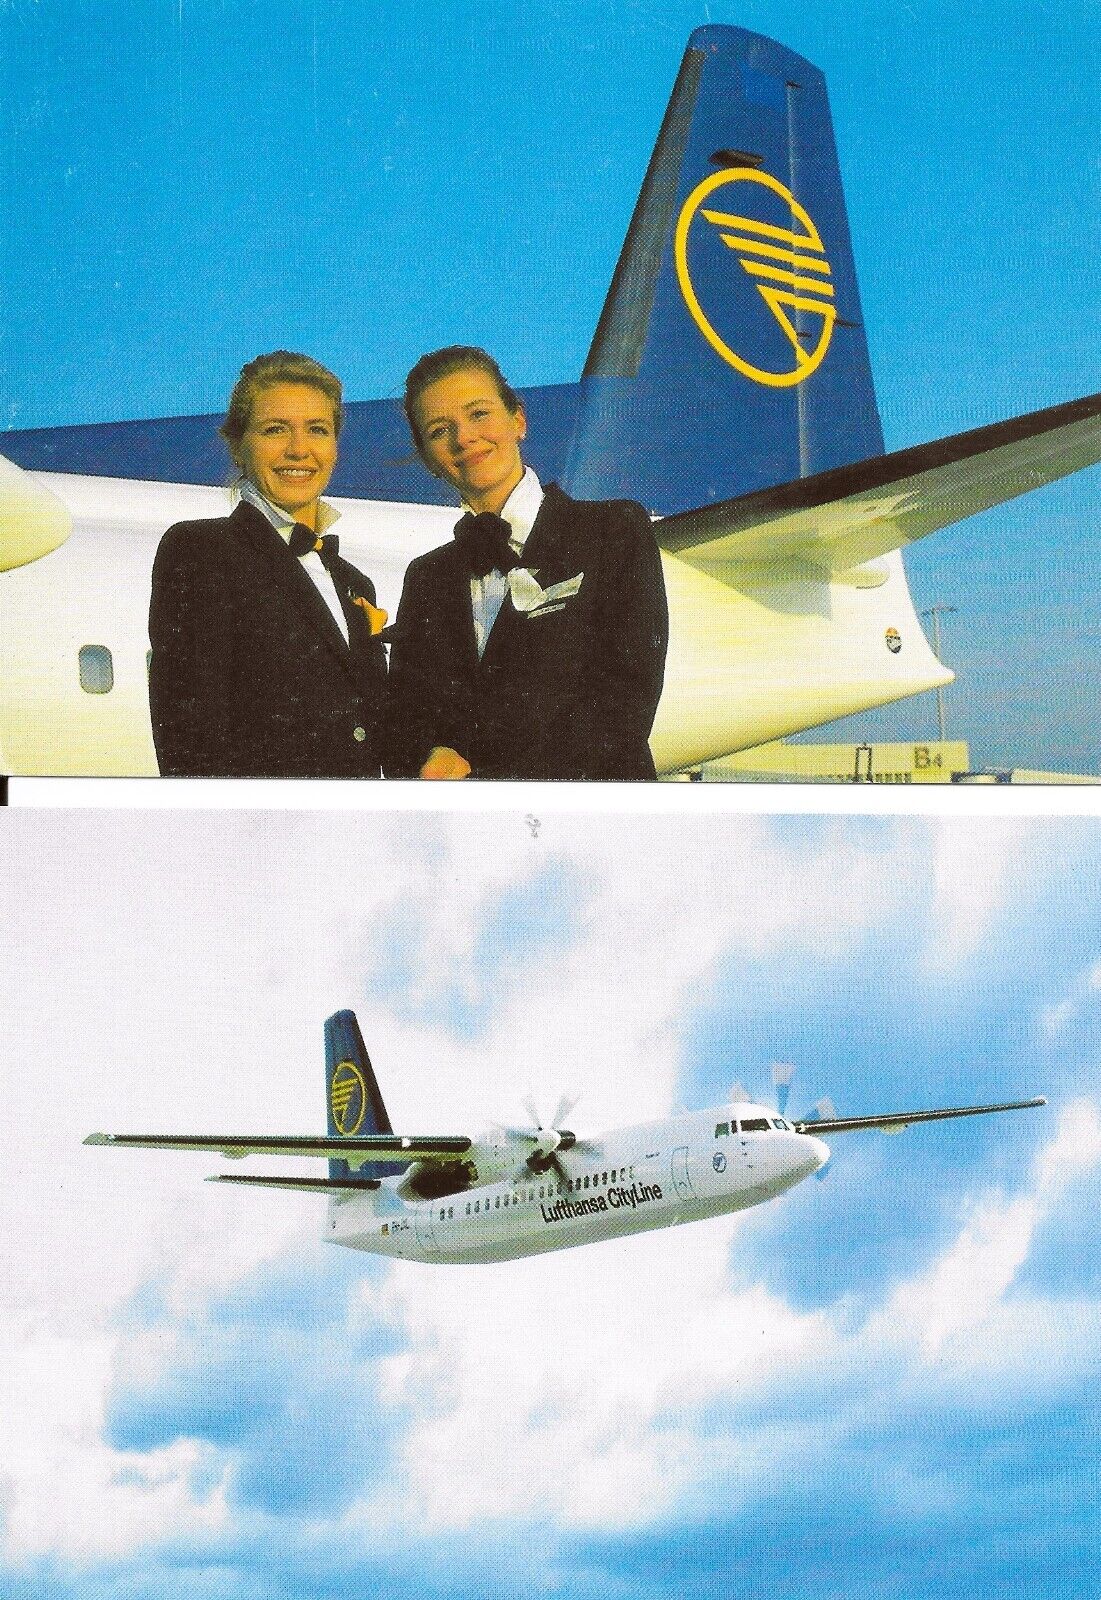 LUFTHANSA 2 CITYLINE Airline issued Postcards, Flight Attendants